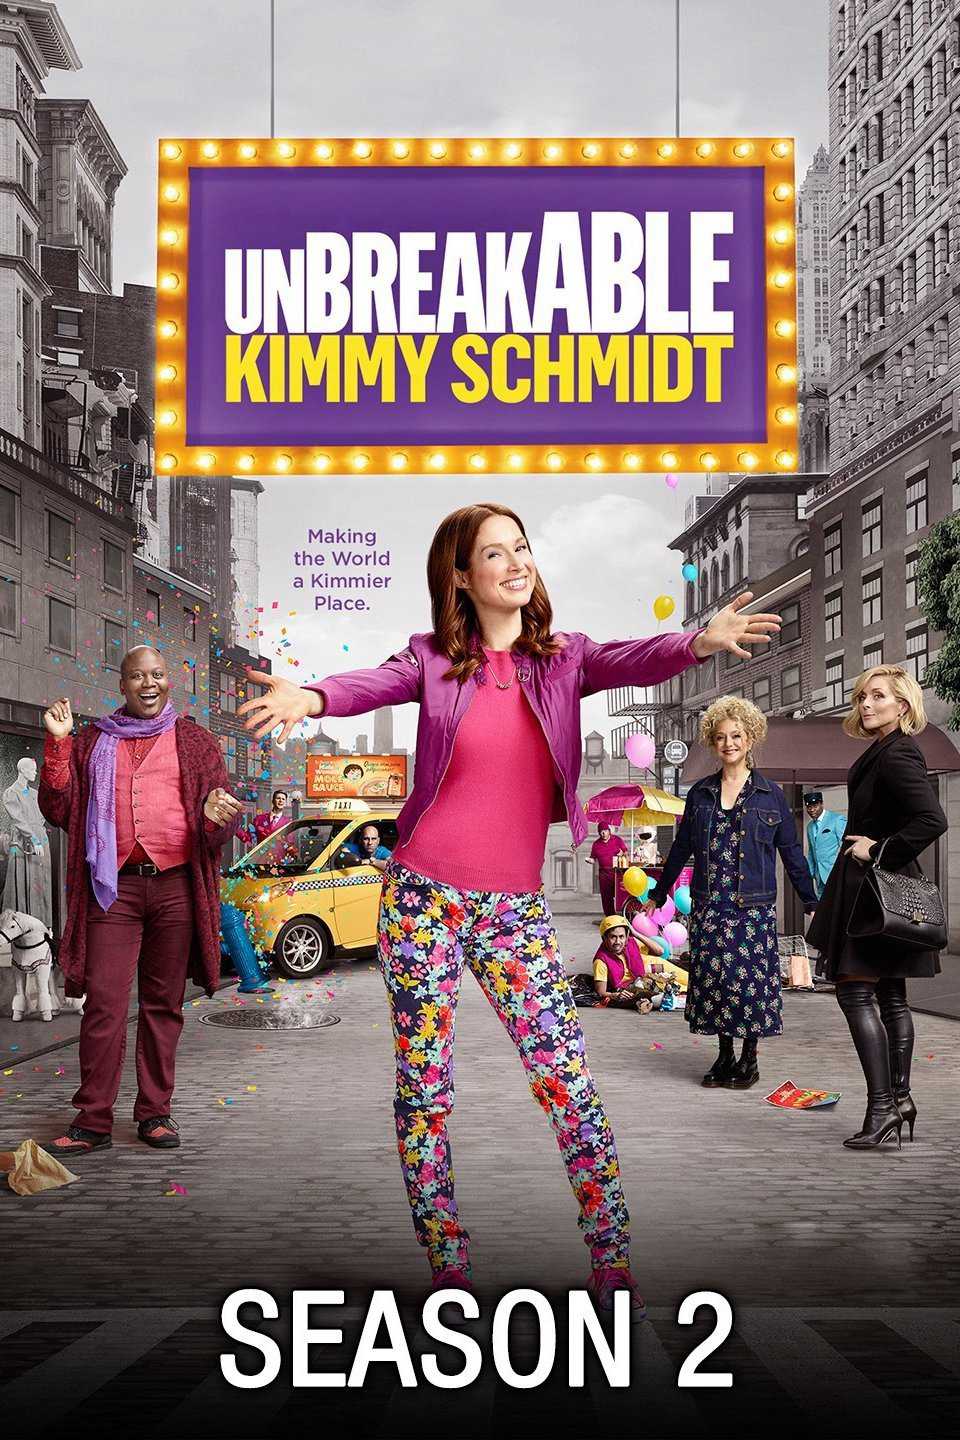 Kimmy bất bại (phần 2) - Unbreakable kimmy schmidt (season 2)